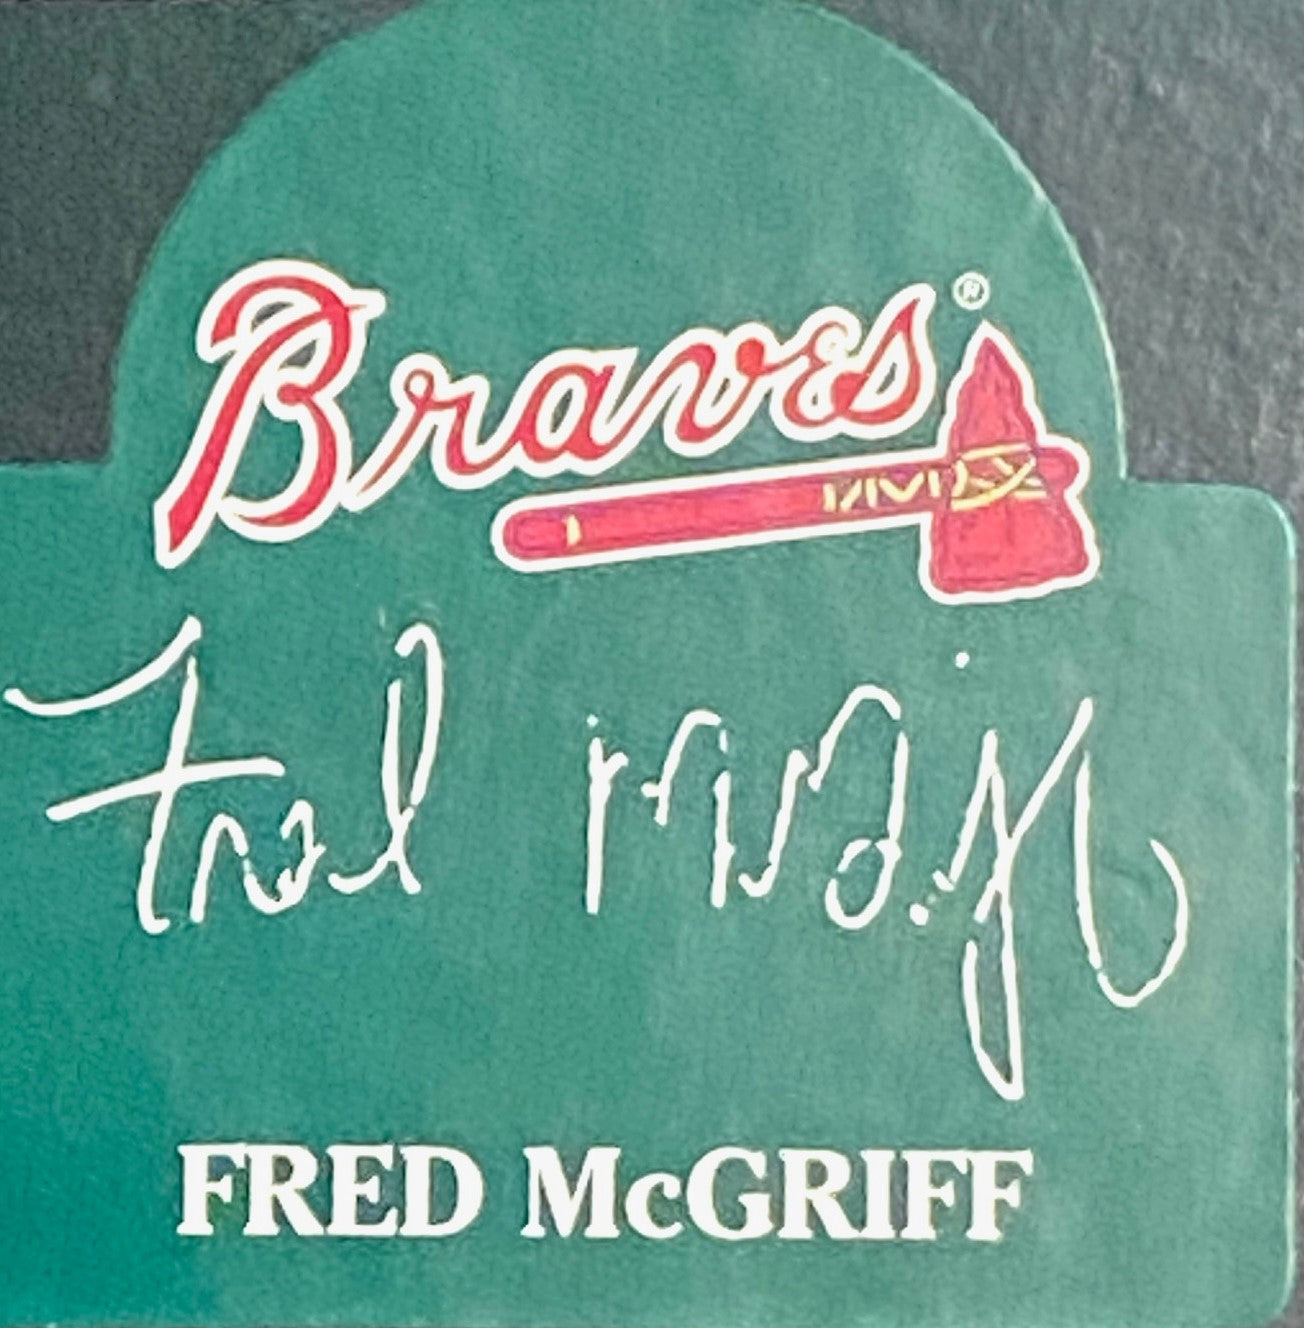 Fred McGriff 1996 MLB Atlanta Braves Headliner Figurine by Corinthian